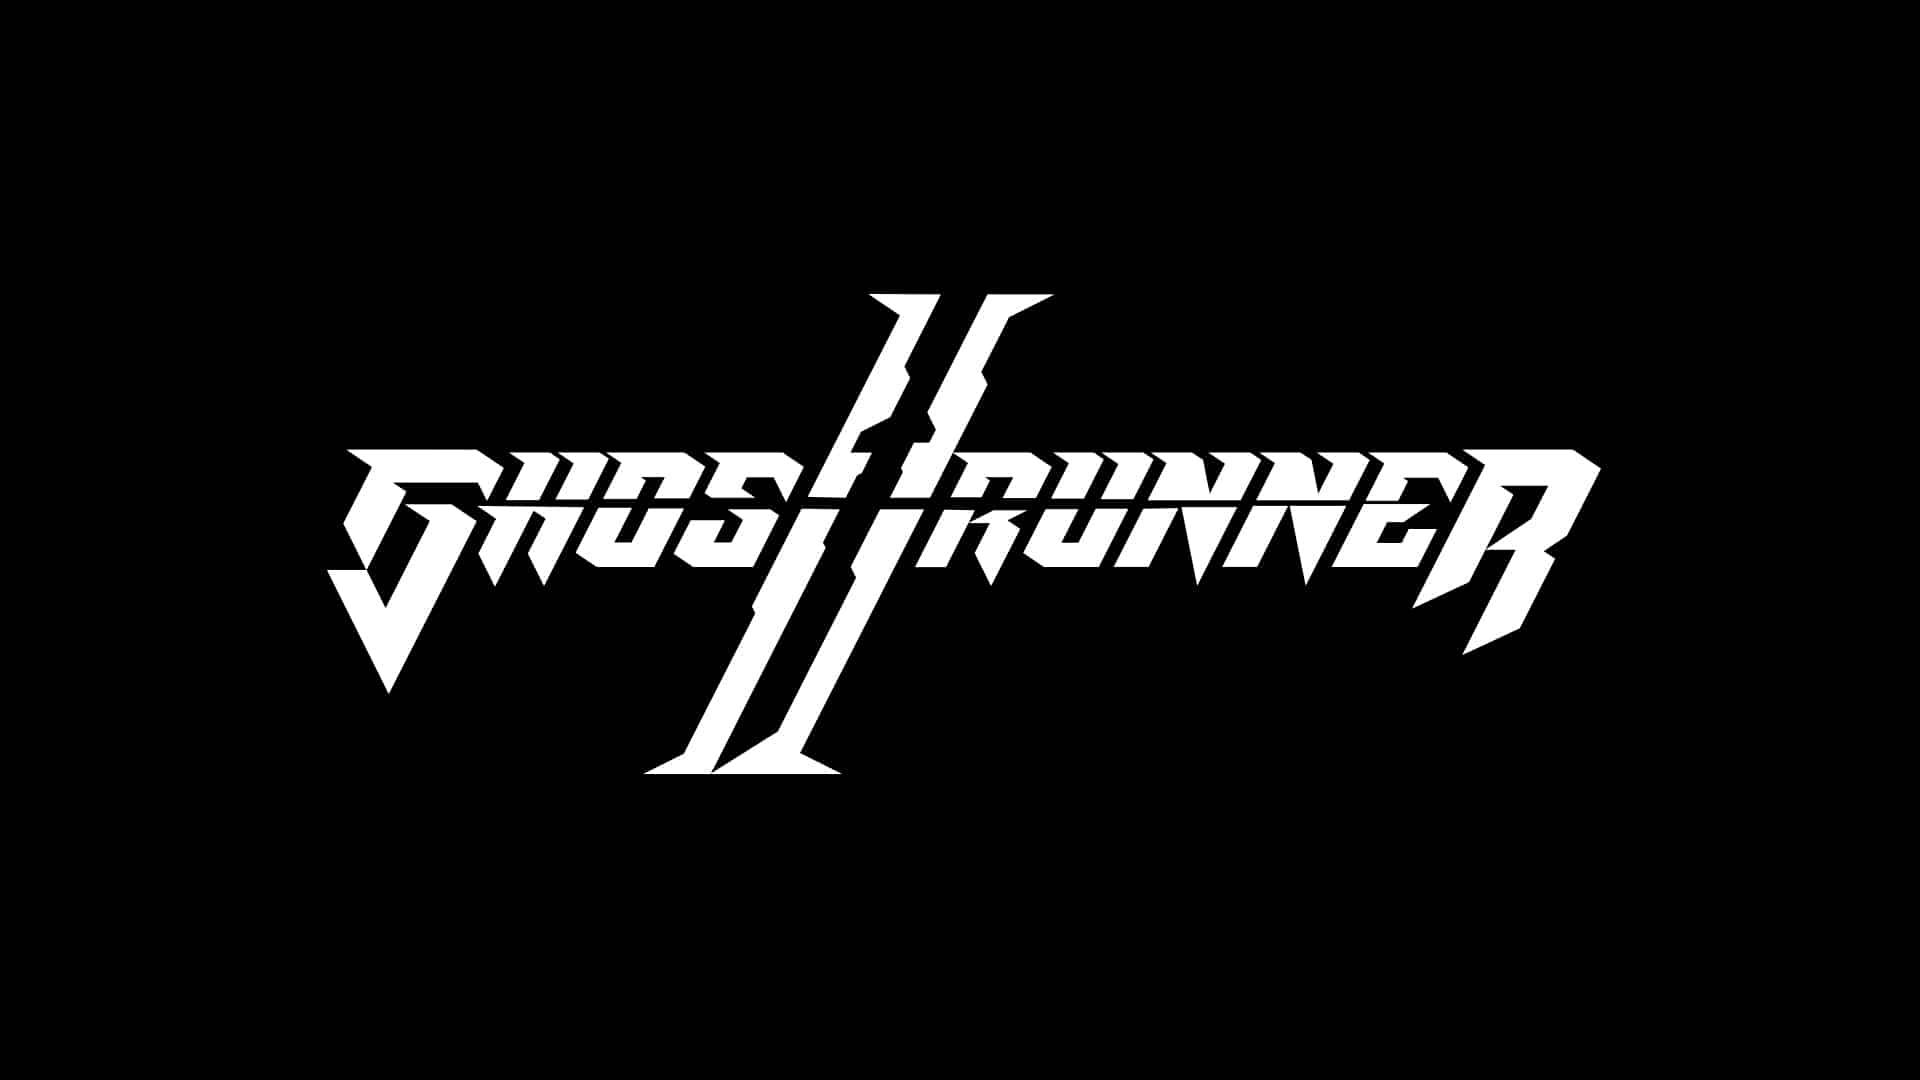 Ghostrunner2 2